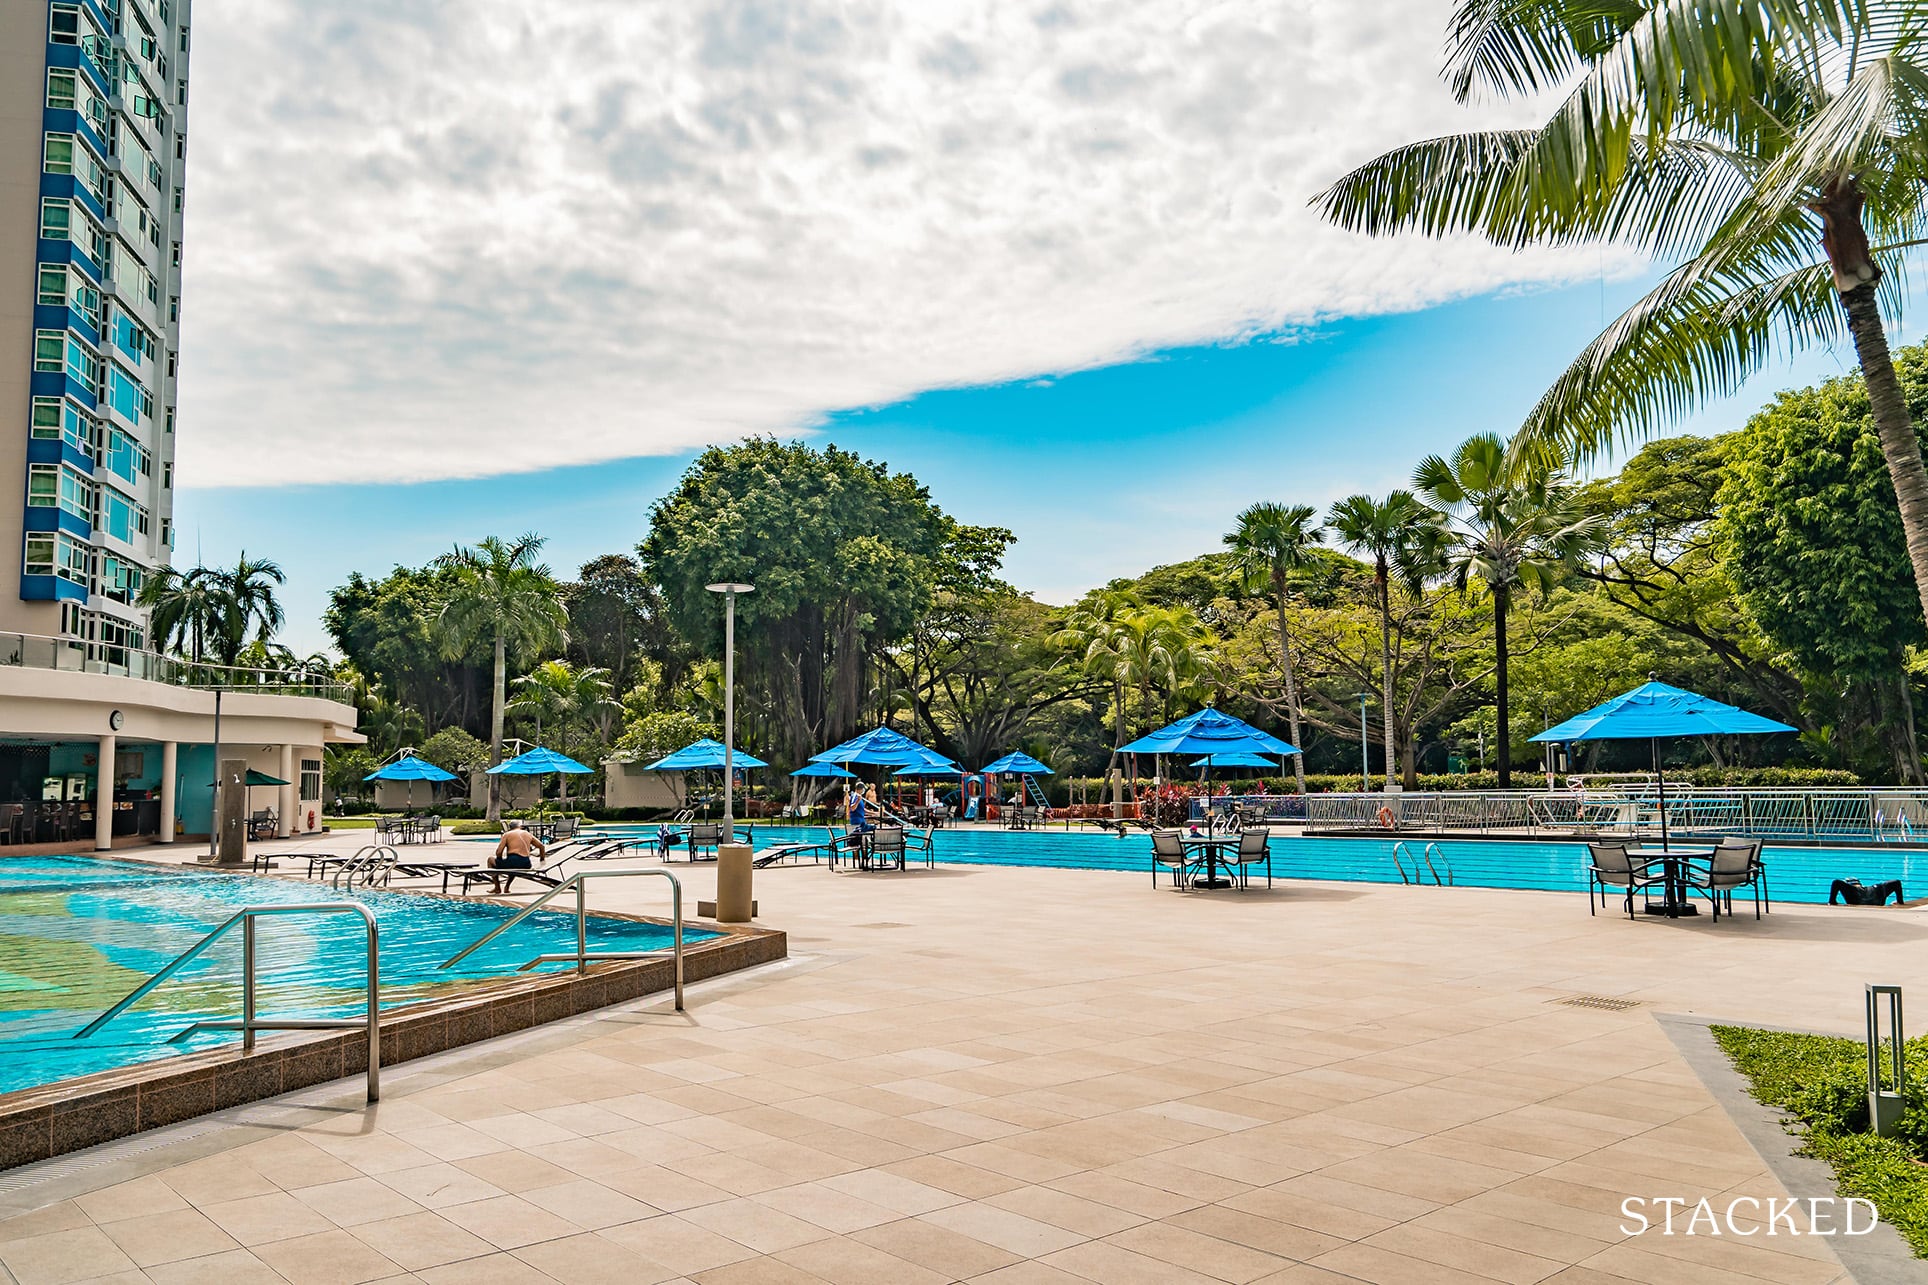 Costa Del Sol pool seating